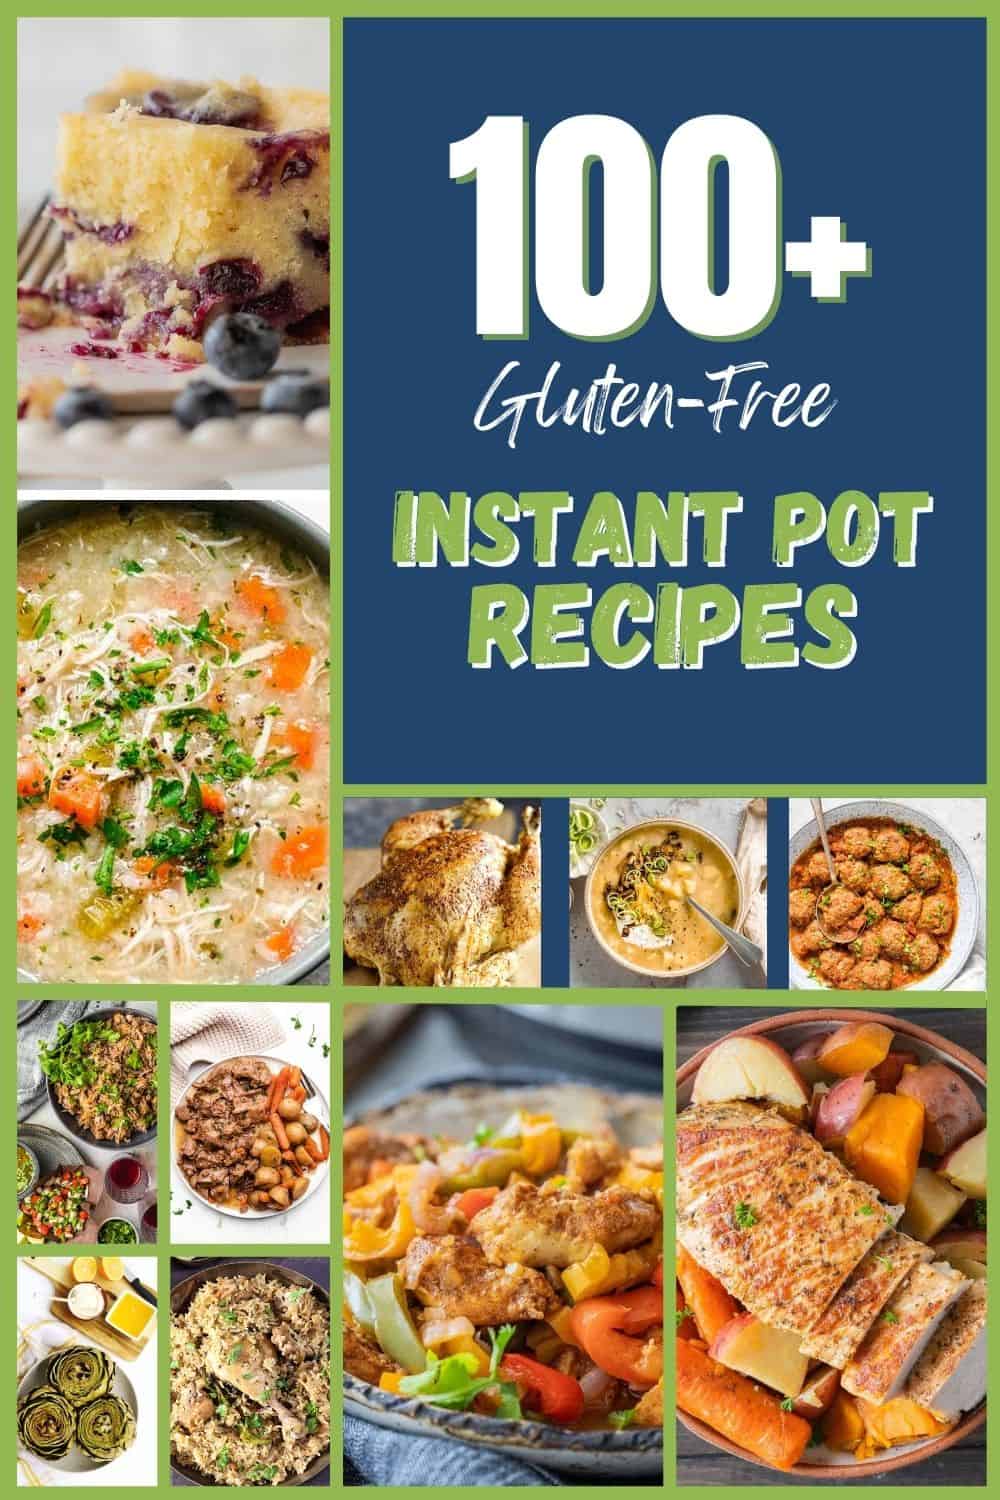 Pin of 12 gluten-free instant pot recipes